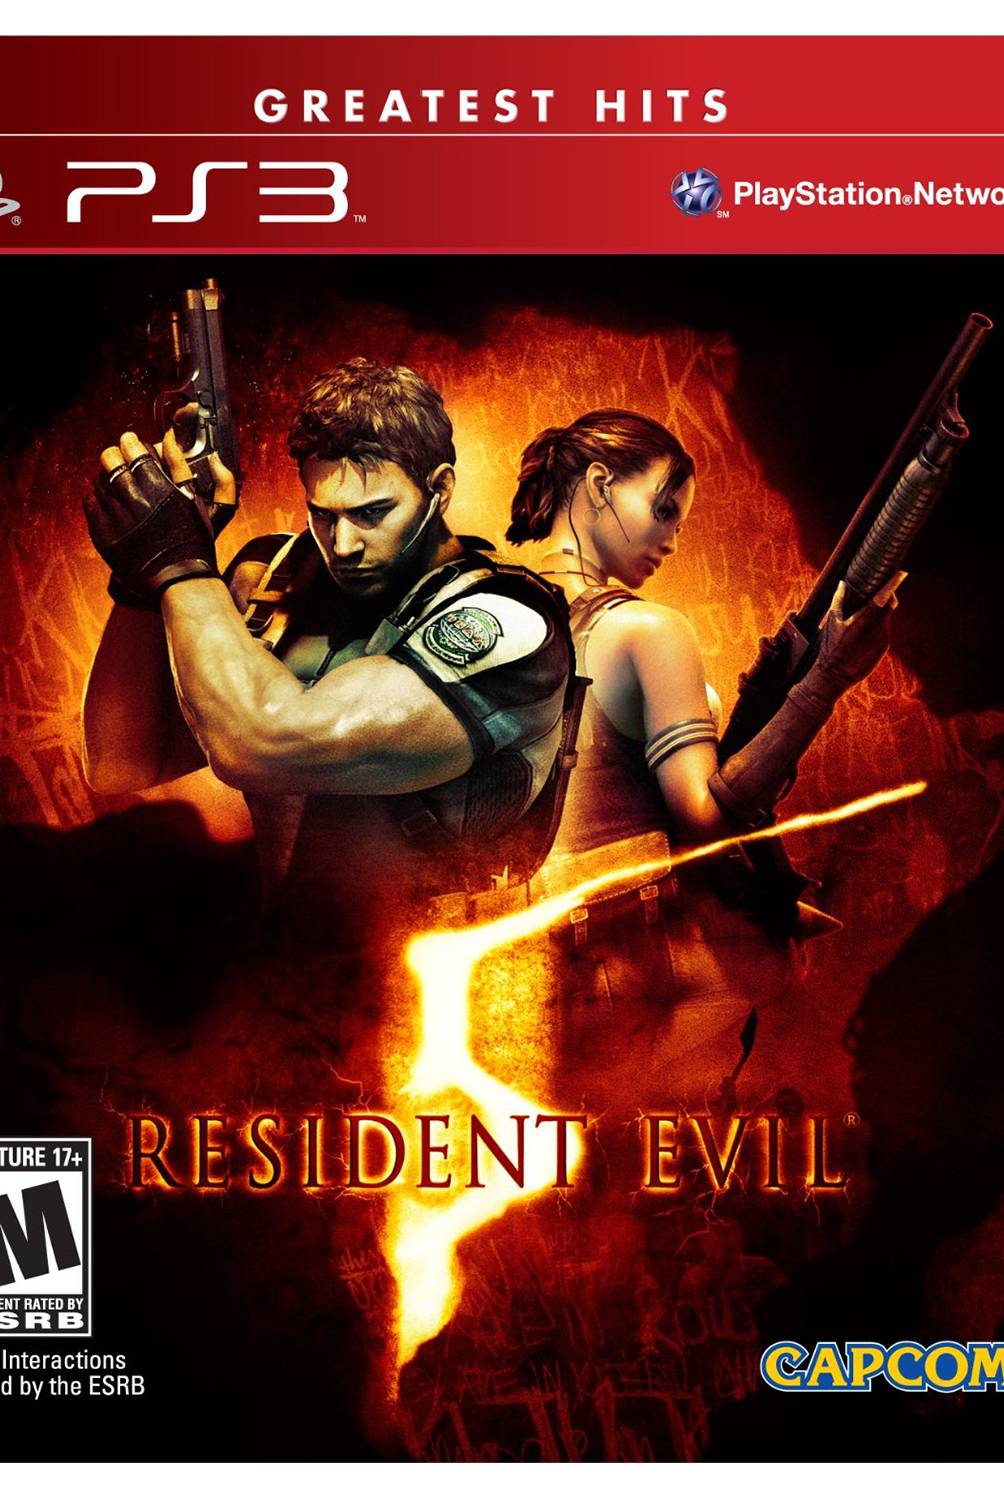 Capcom - Resident Evil 5 GH PS3